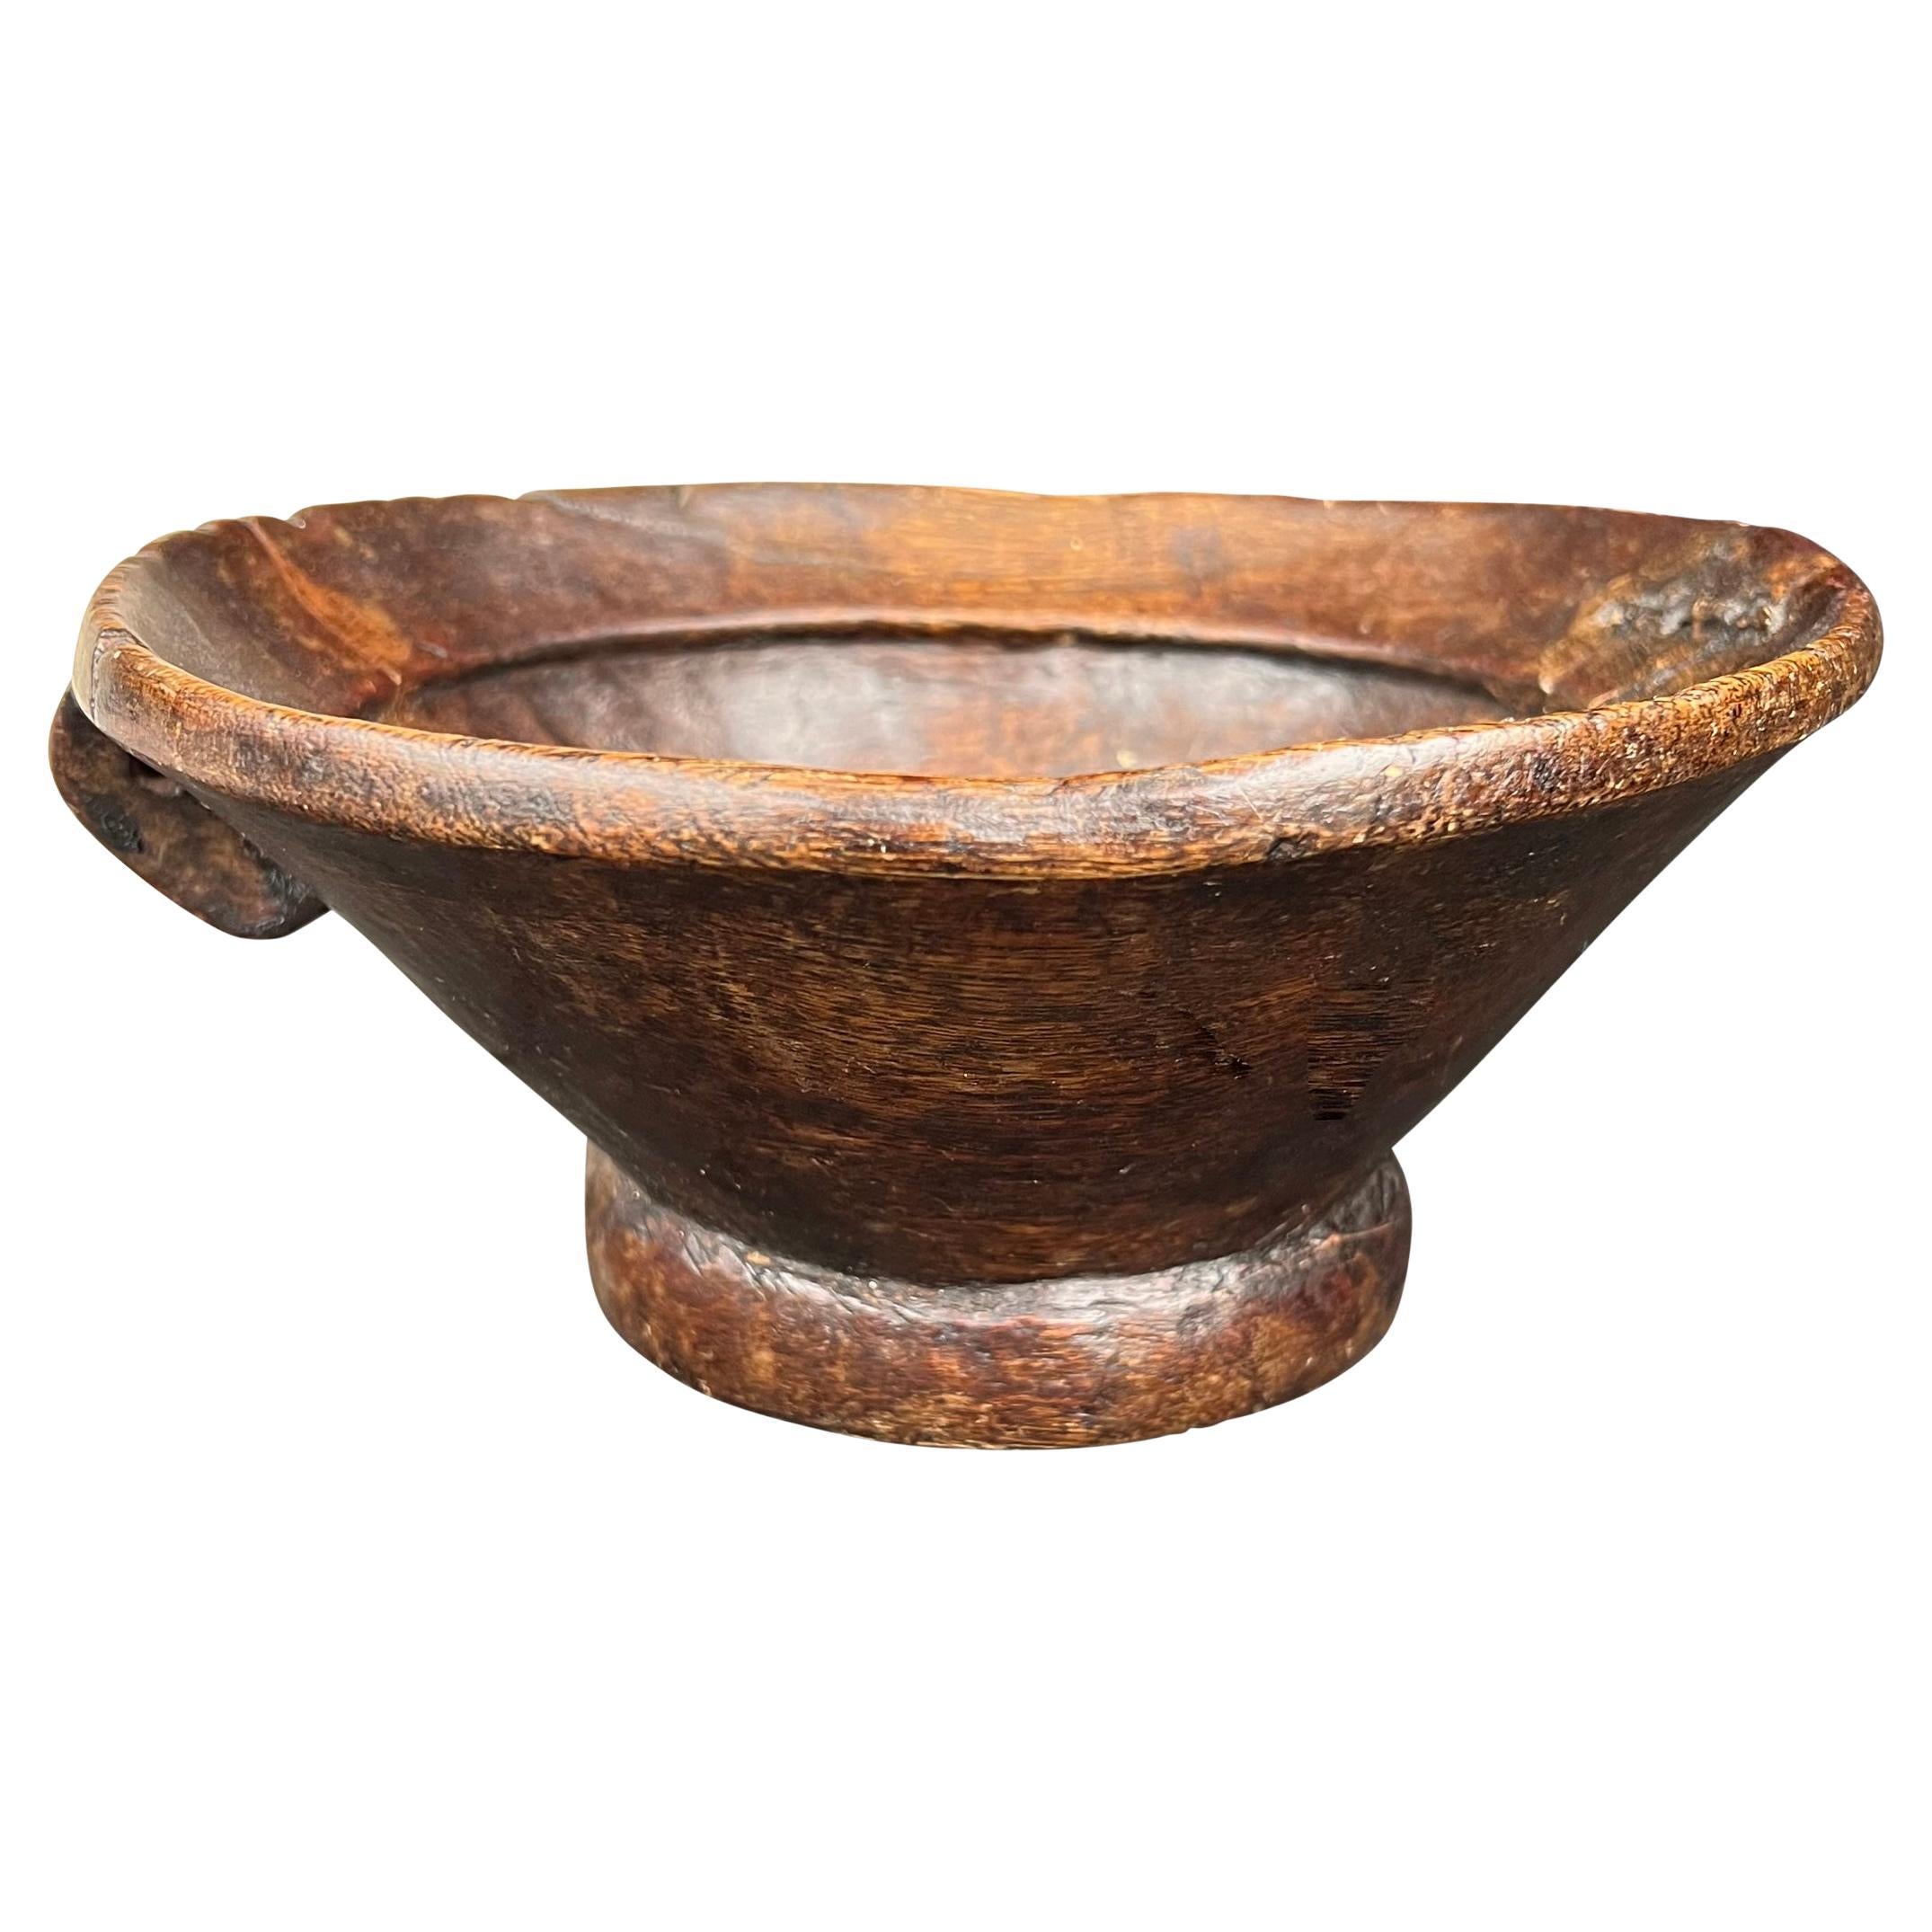 19th Century Wooden Bowl